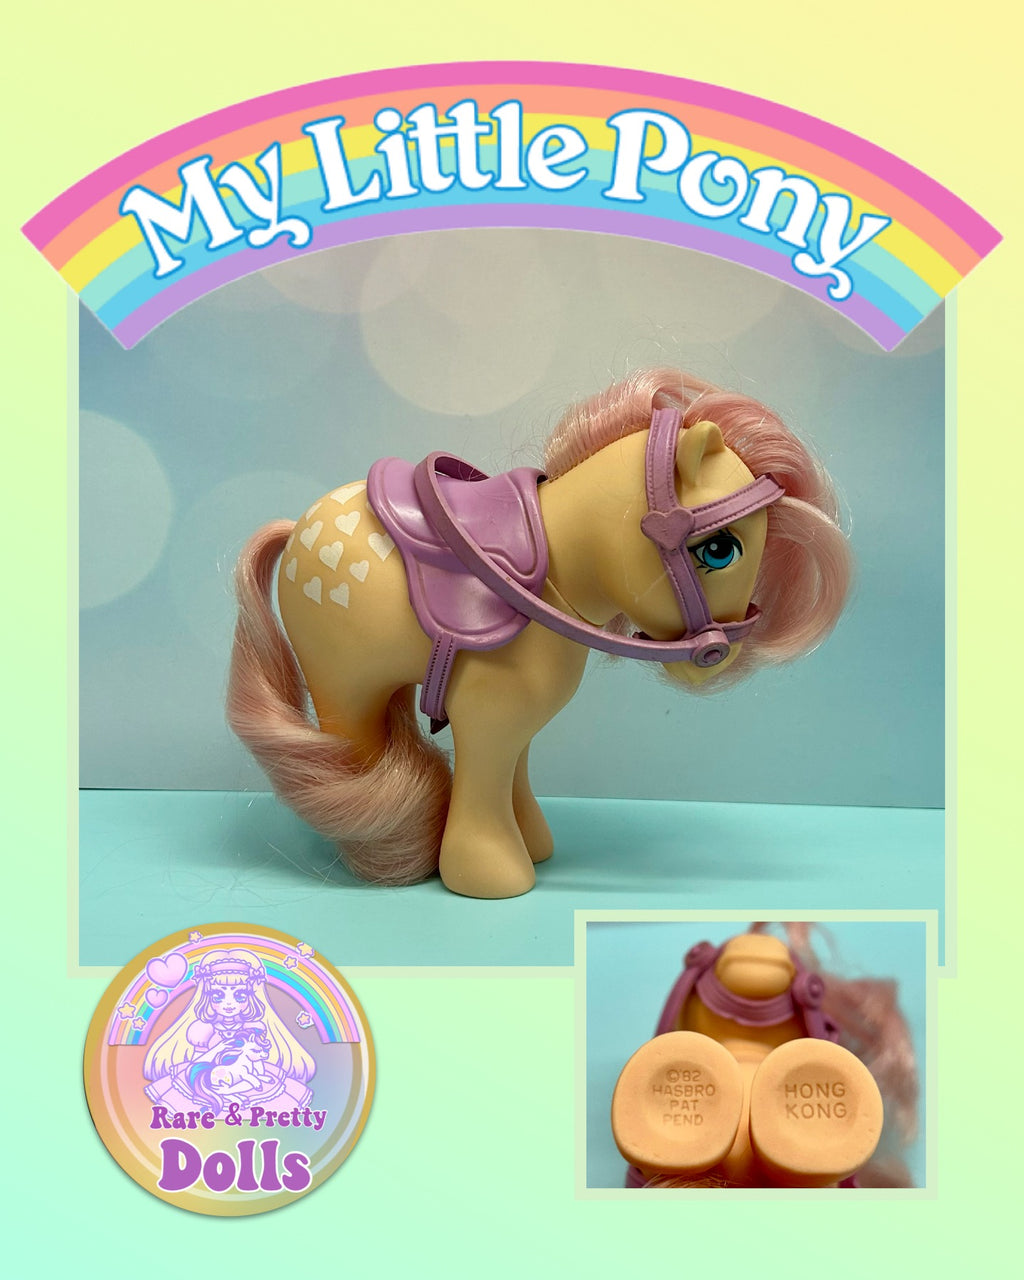 Original My Little Pony “Peachy” Pretty Parlour exclusive